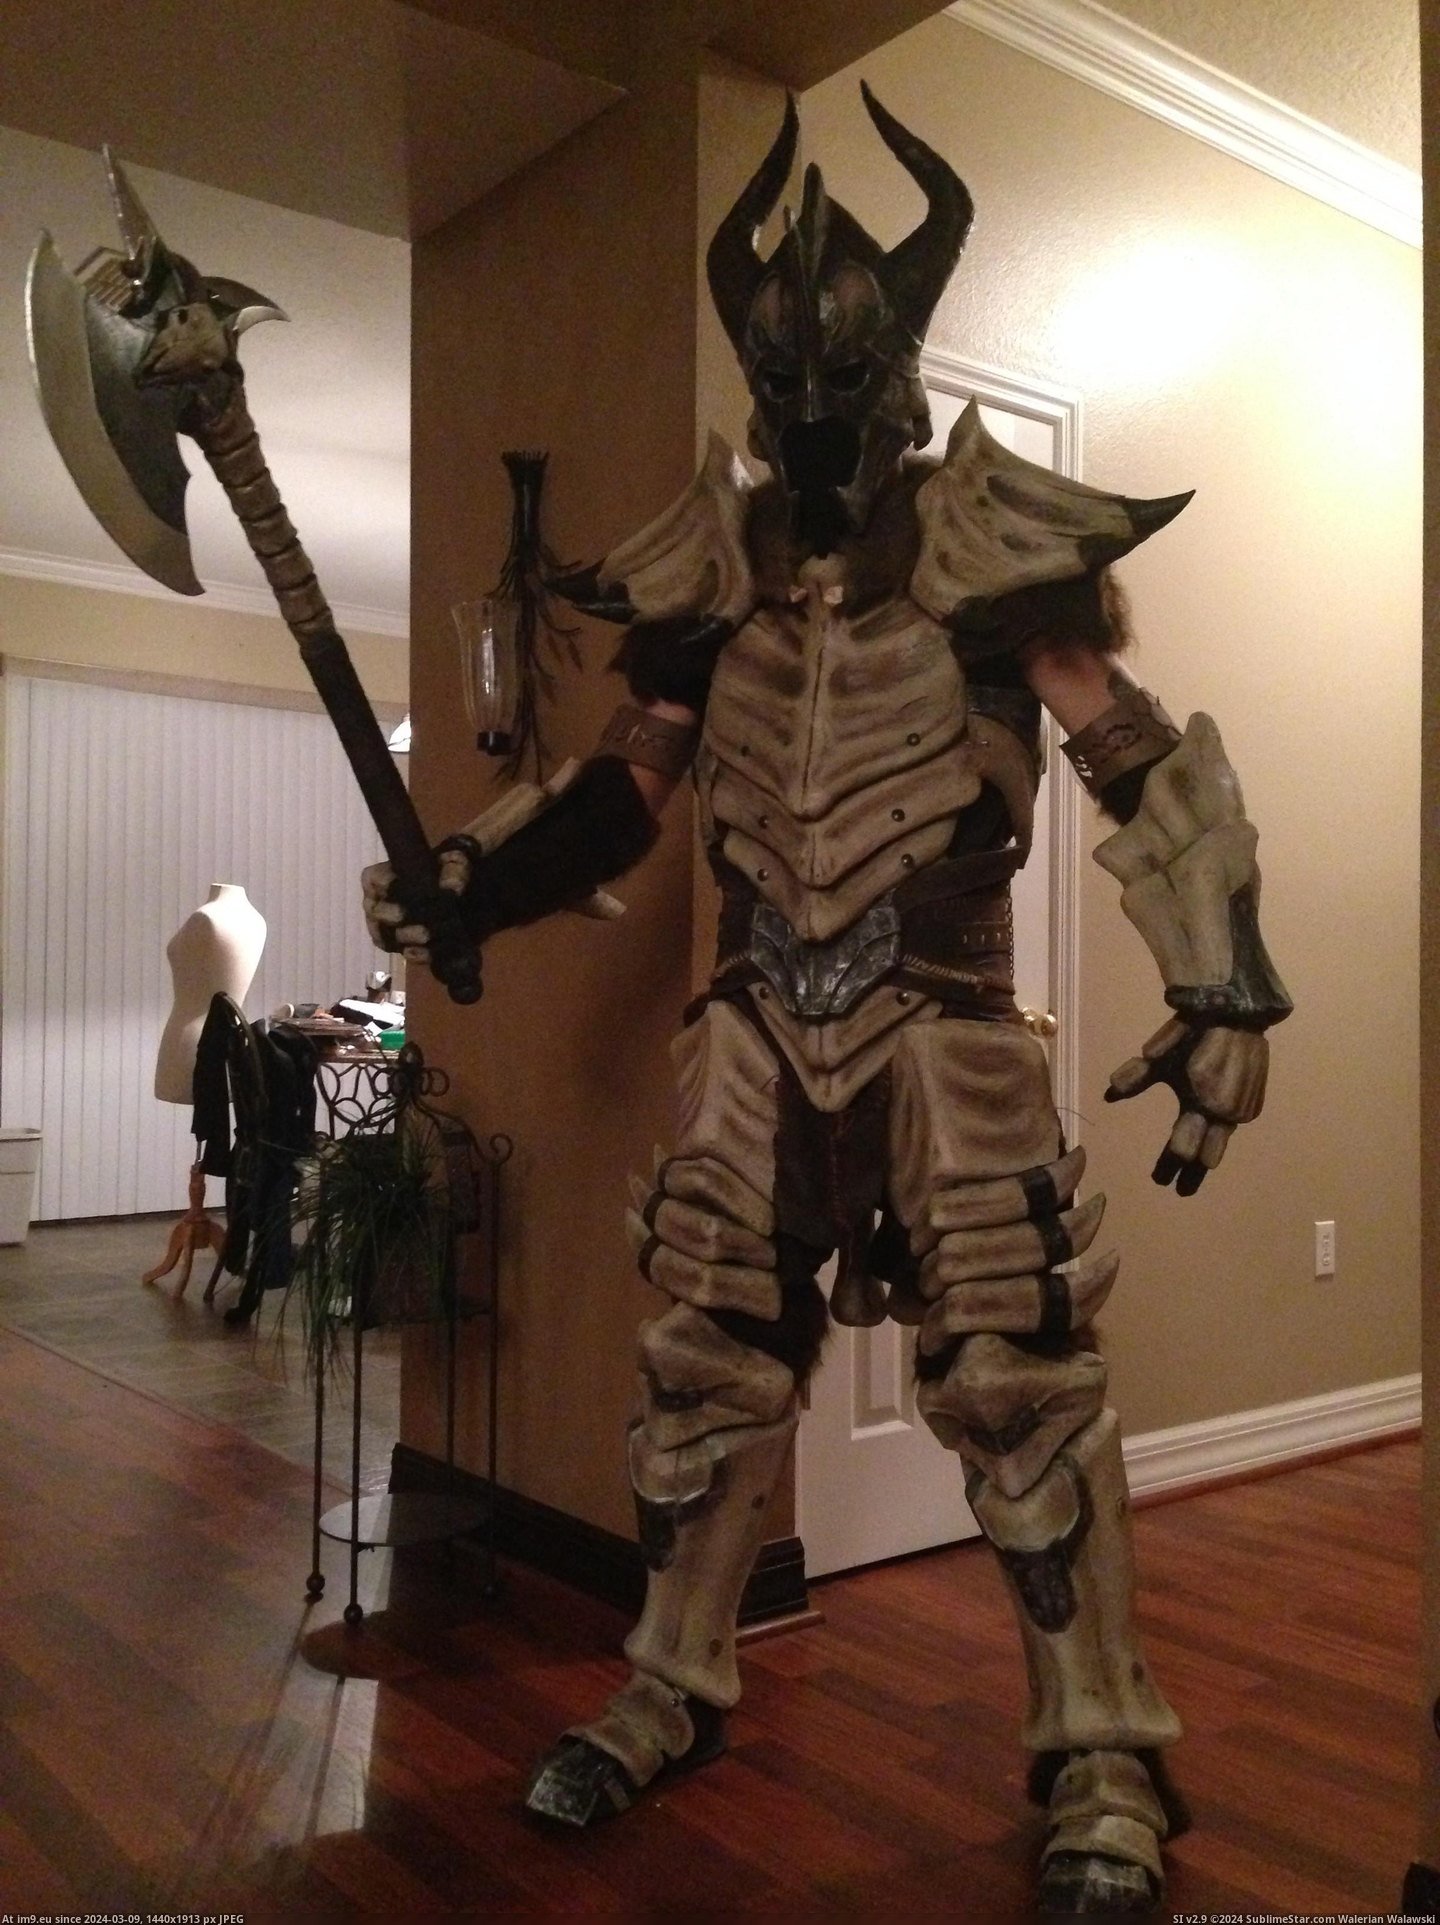 #Gaming #How #Dragonbone #Skyrim #Armor [Gaming] [Self] Skyrim Dragonbone Armor - How I made it 17 Pic. (Изображение из альбом My r/GAMING favs))